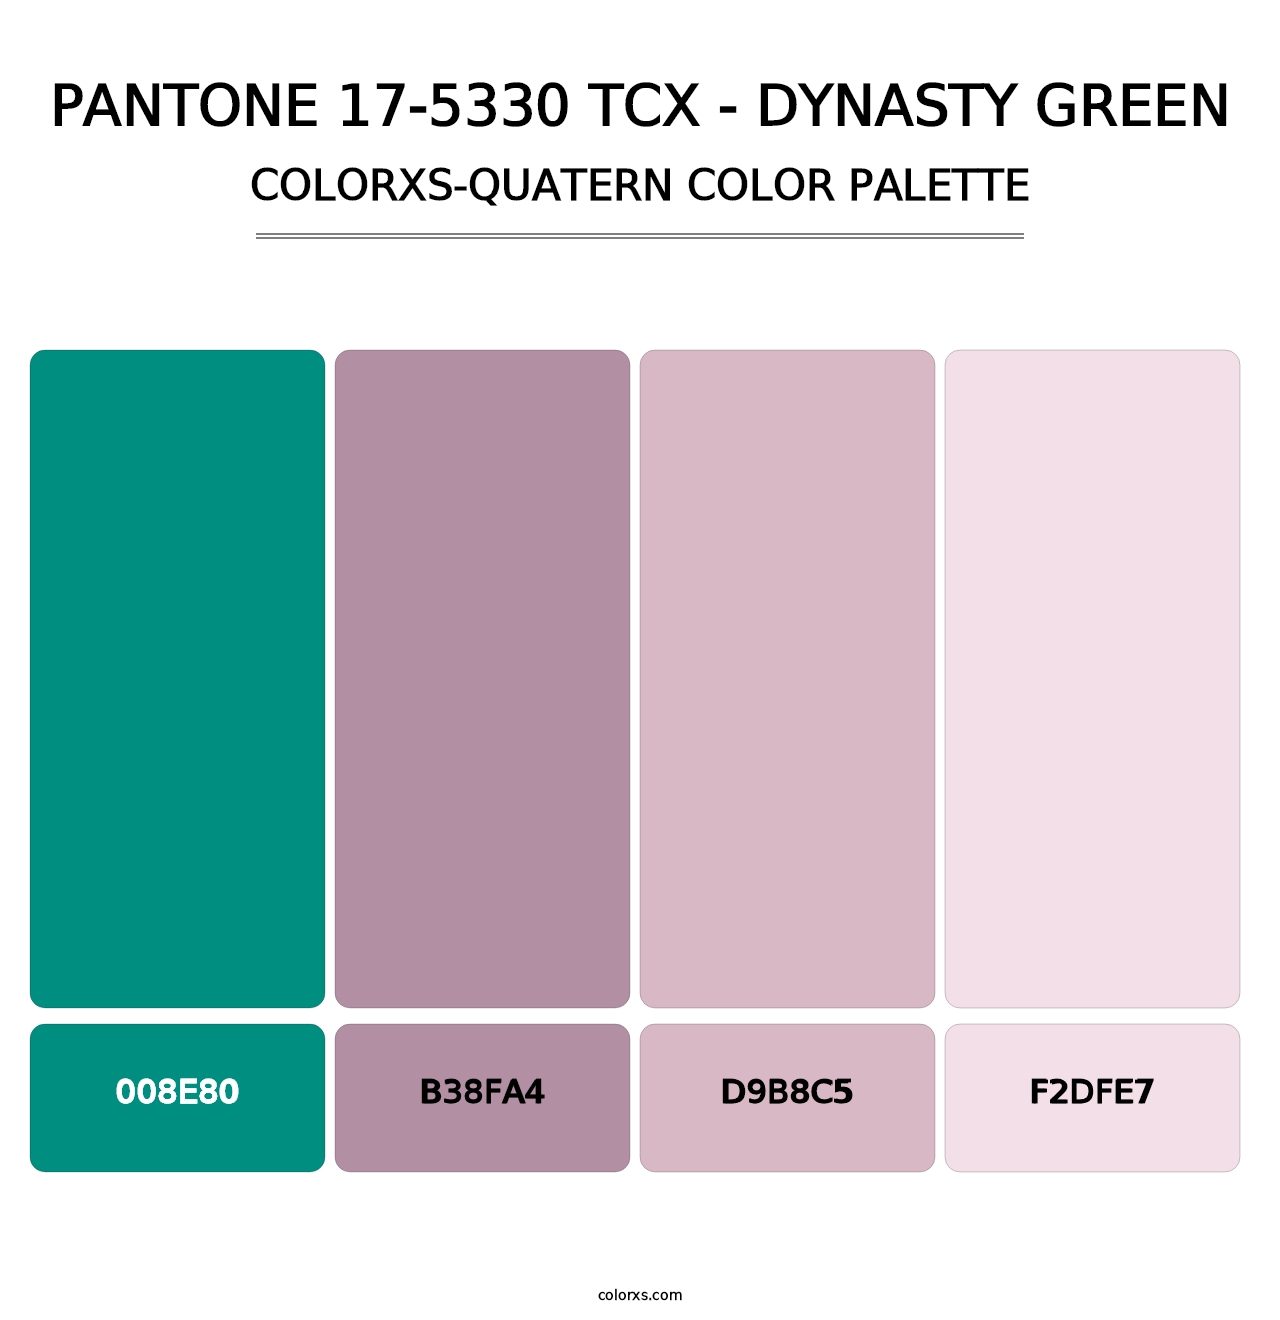 PANTONE 17-5330 TCX - Dynasty Green - Colorxs Quatern Palette